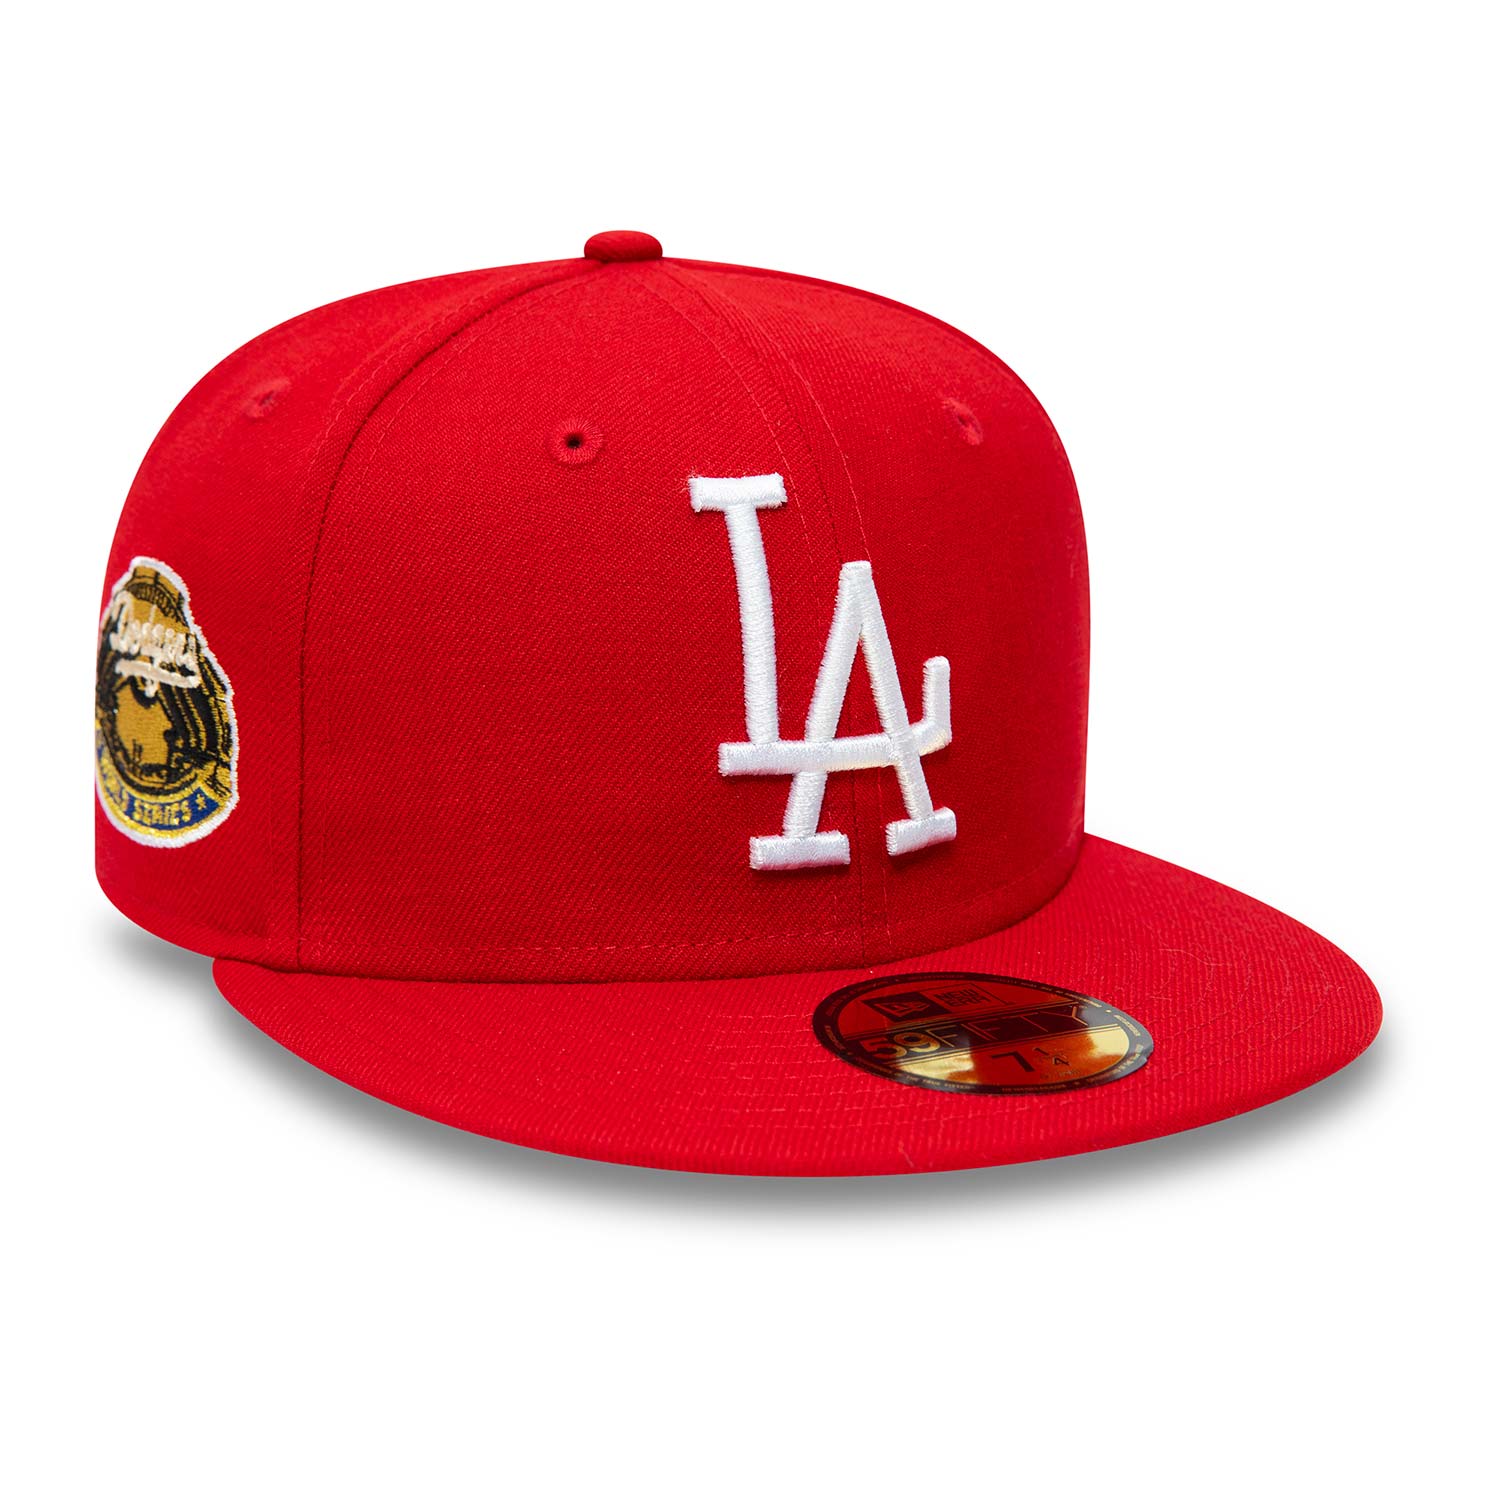 LA World Series Trucker Hat - Red